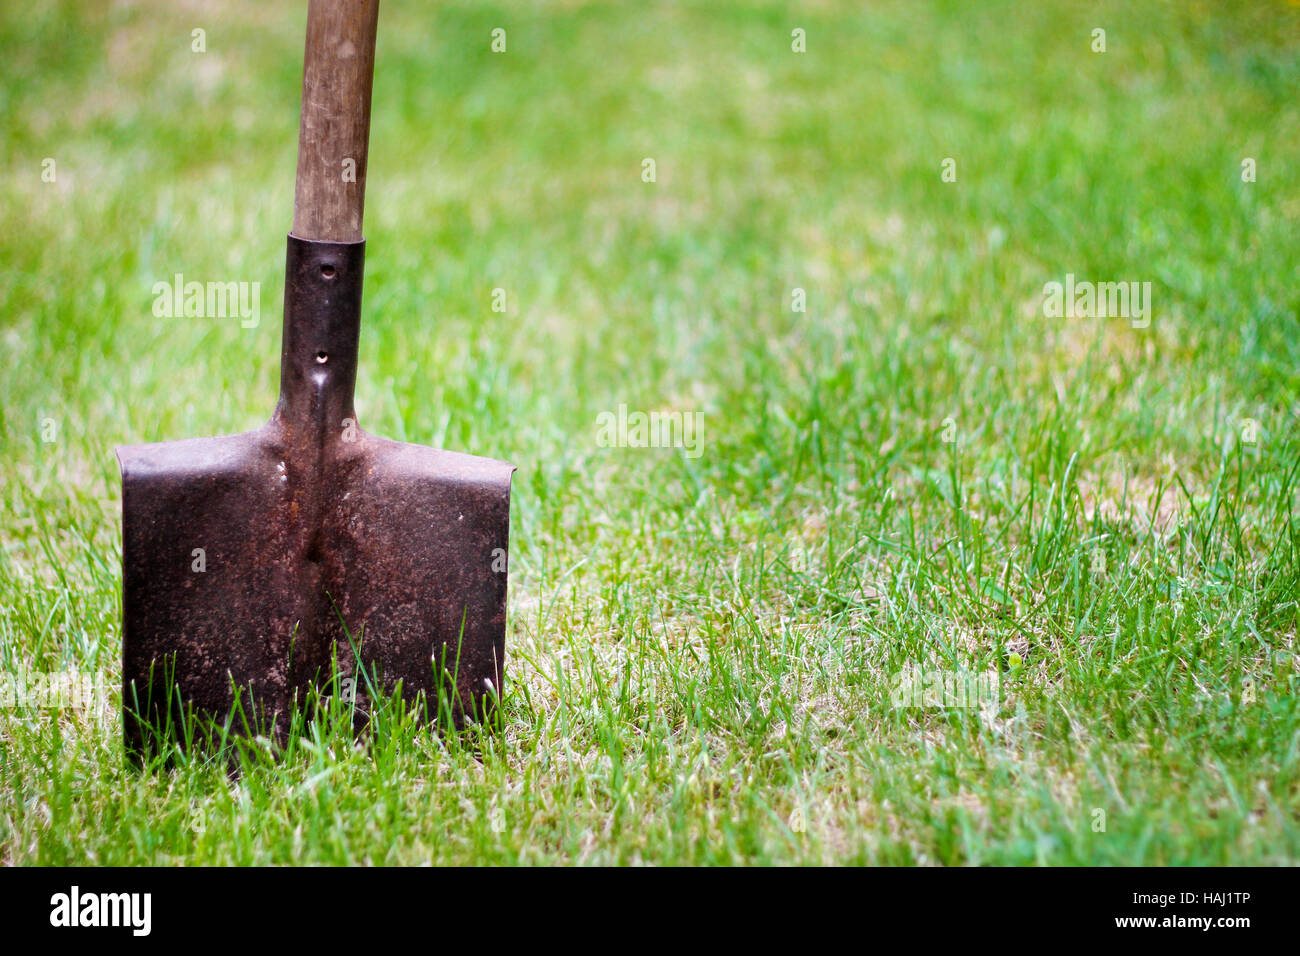 shovel in green grass Stock Photo